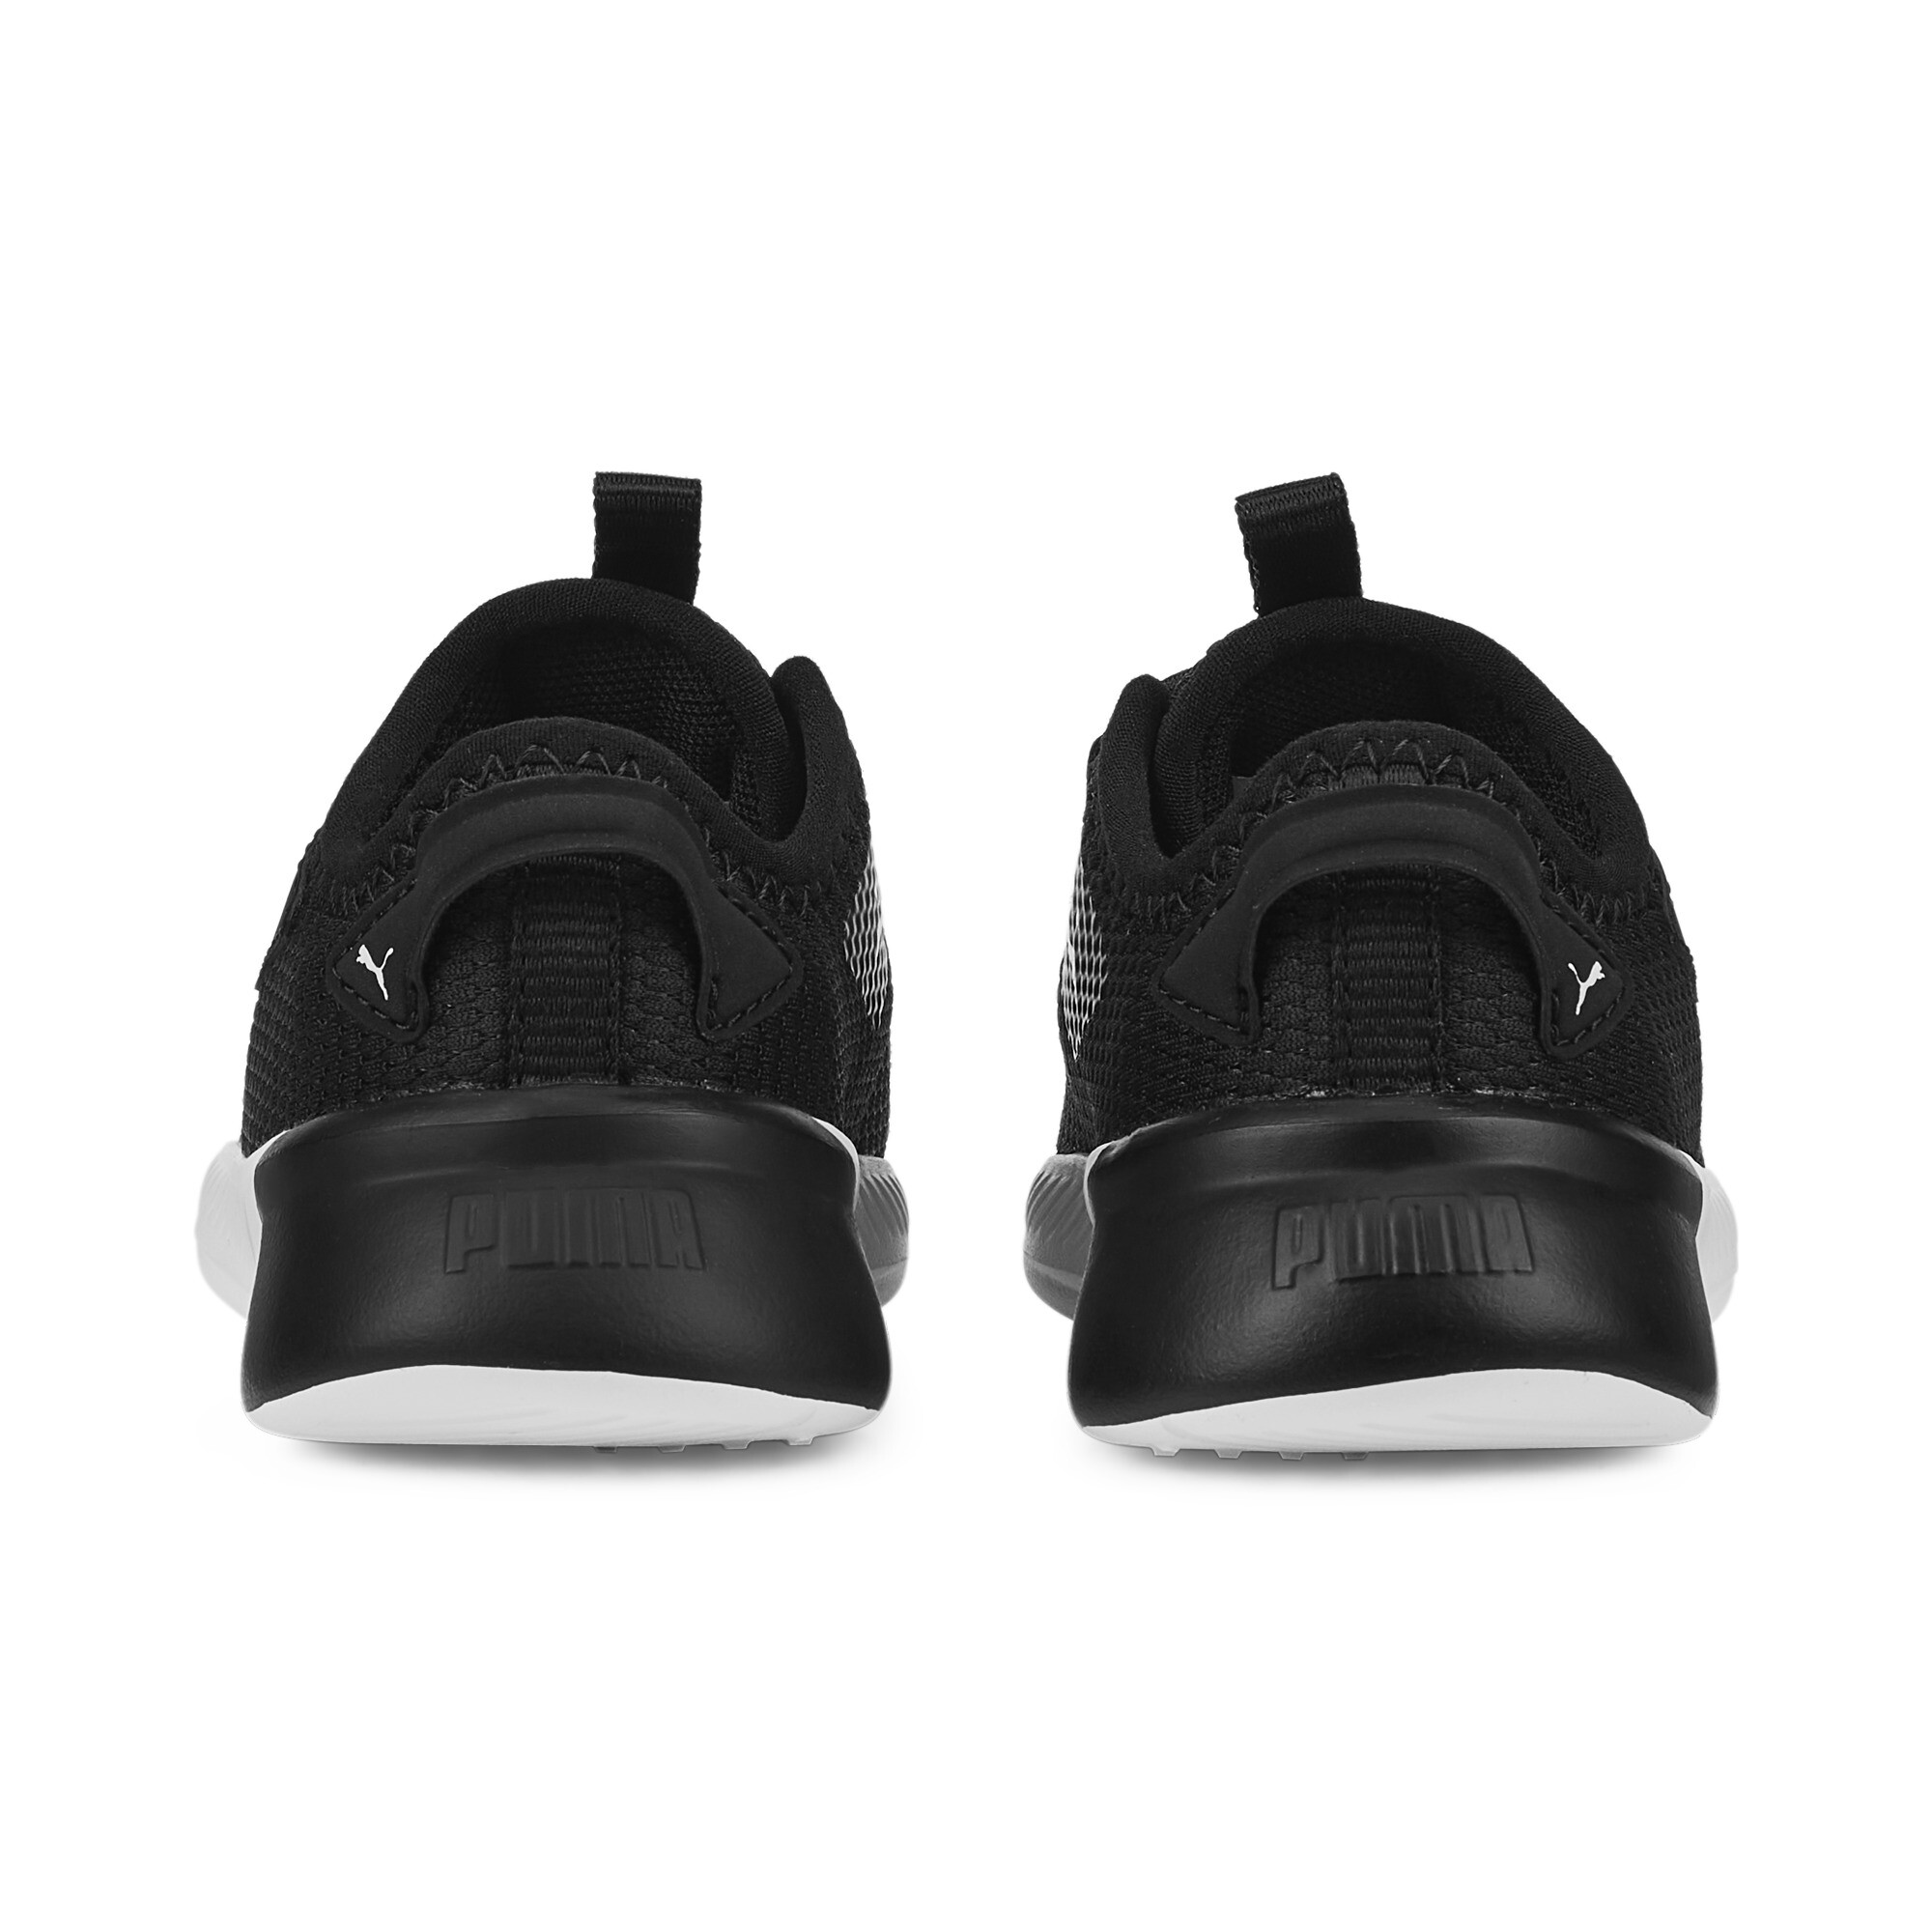 Puma Retaliate 2 AC Sneakers Babies, Black, Size 27, Shoes